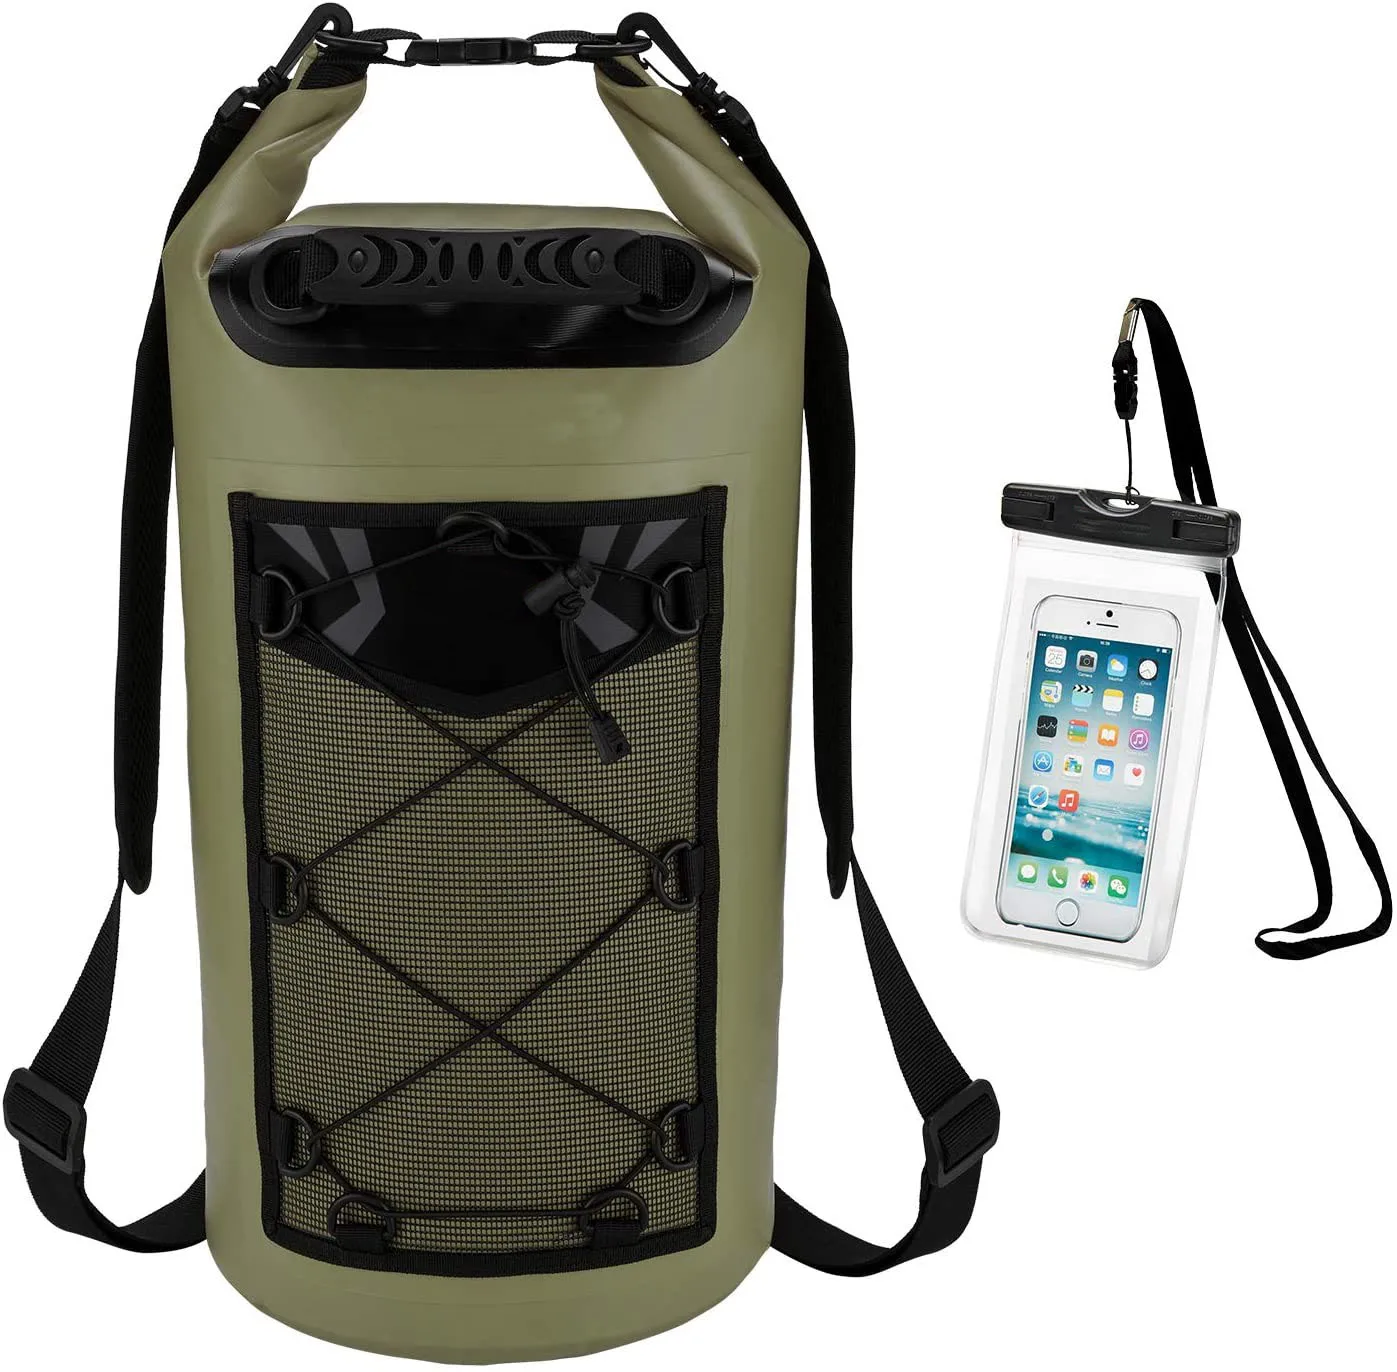 
Waterproof Floating Dry Bag Backpack for Water Sports 